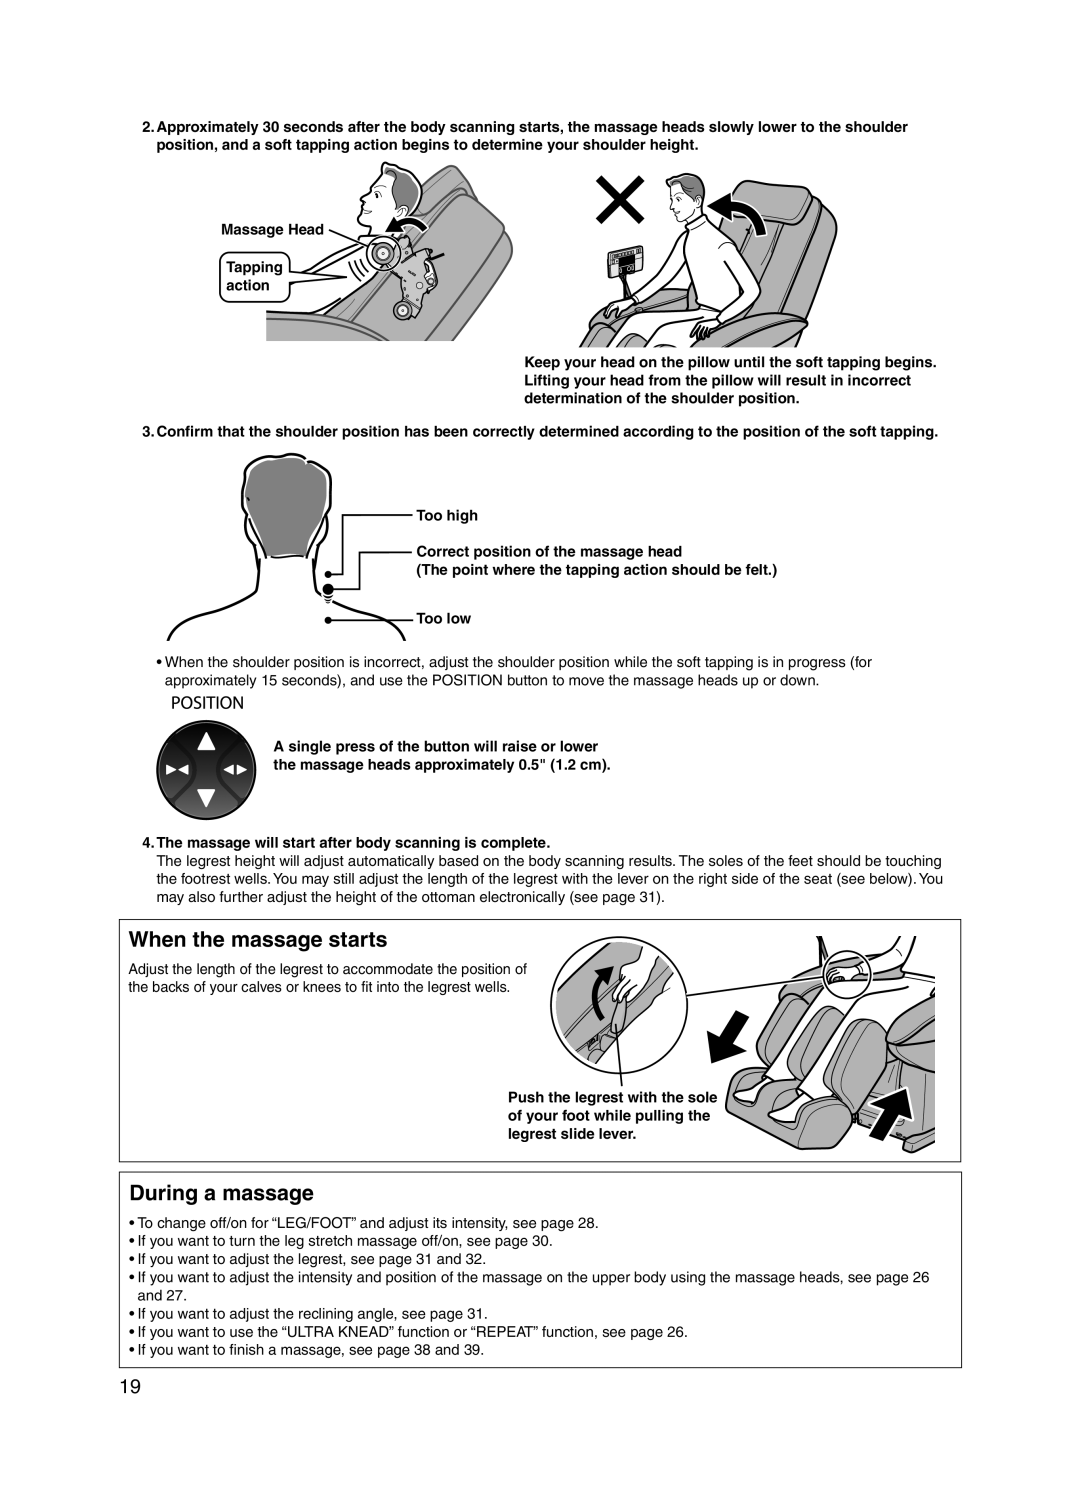 Panasonic 30003 manual When the massage starts, During a massage 